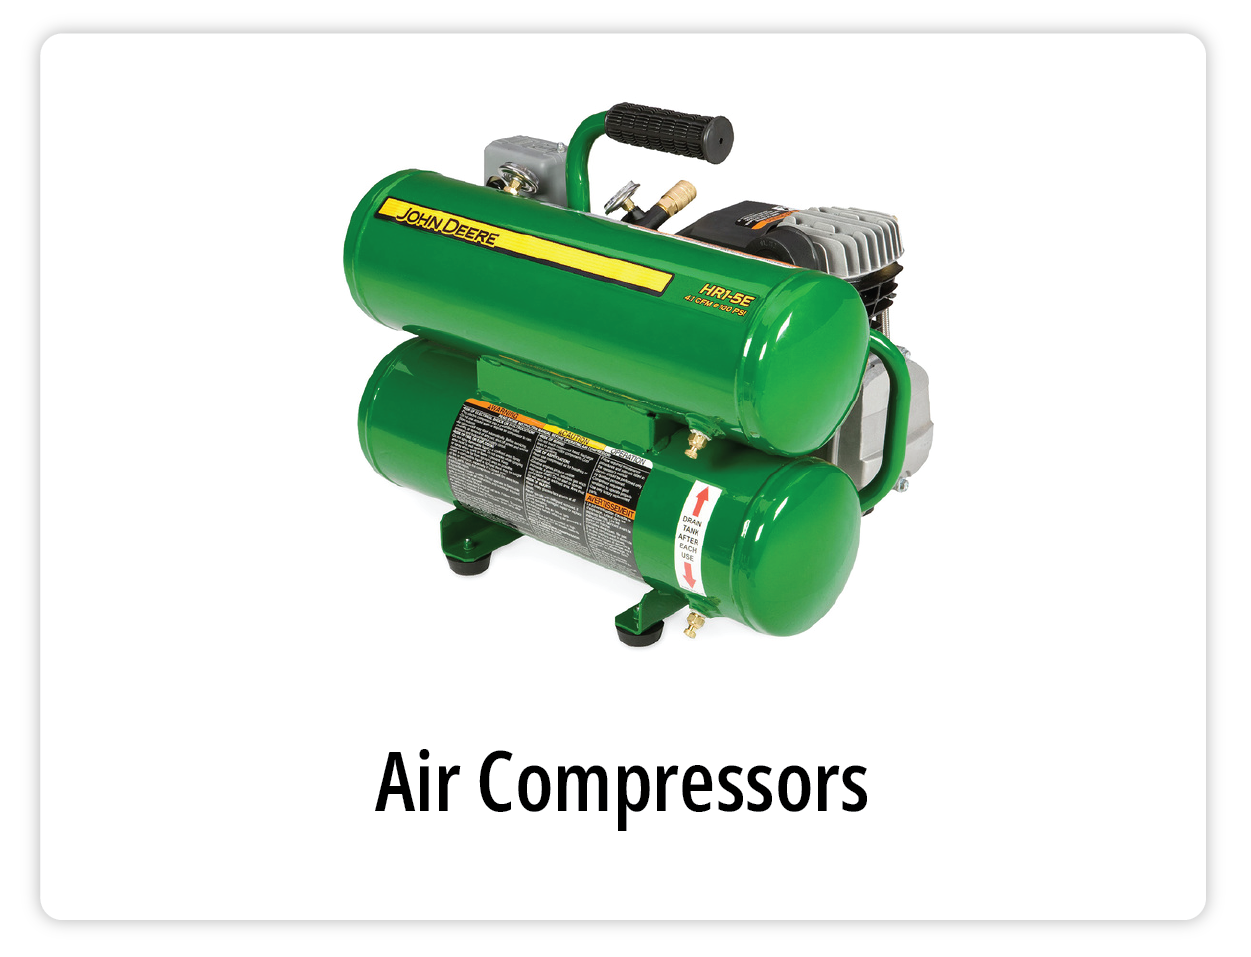 John Deere Air Compressors